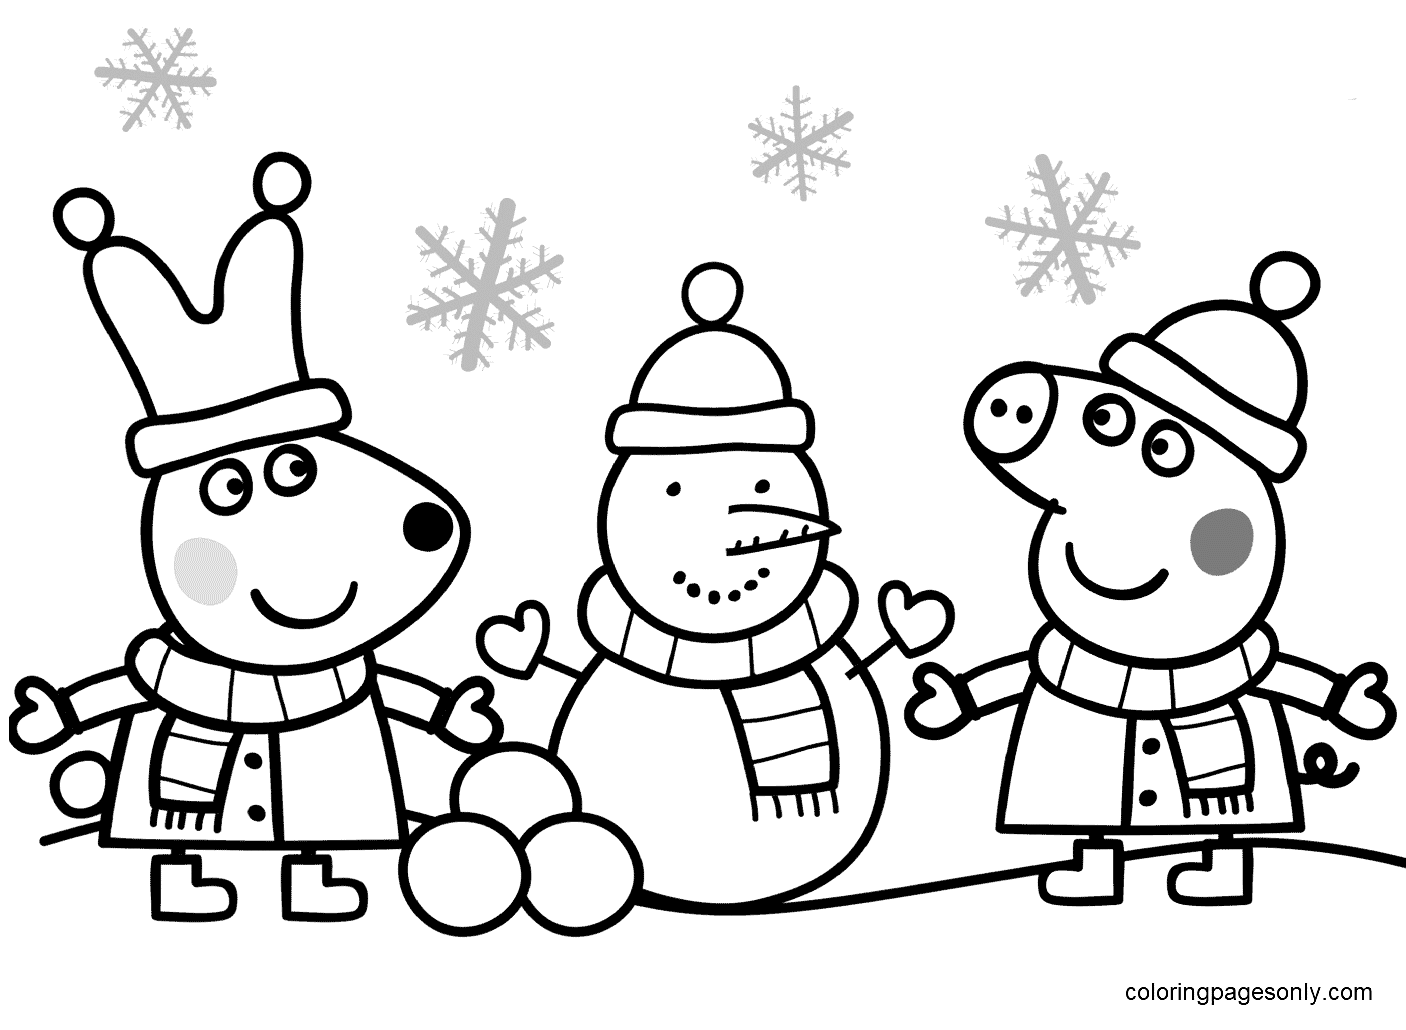 Пеппа и Ребекка лепят снеговика из Свинки Пеппы